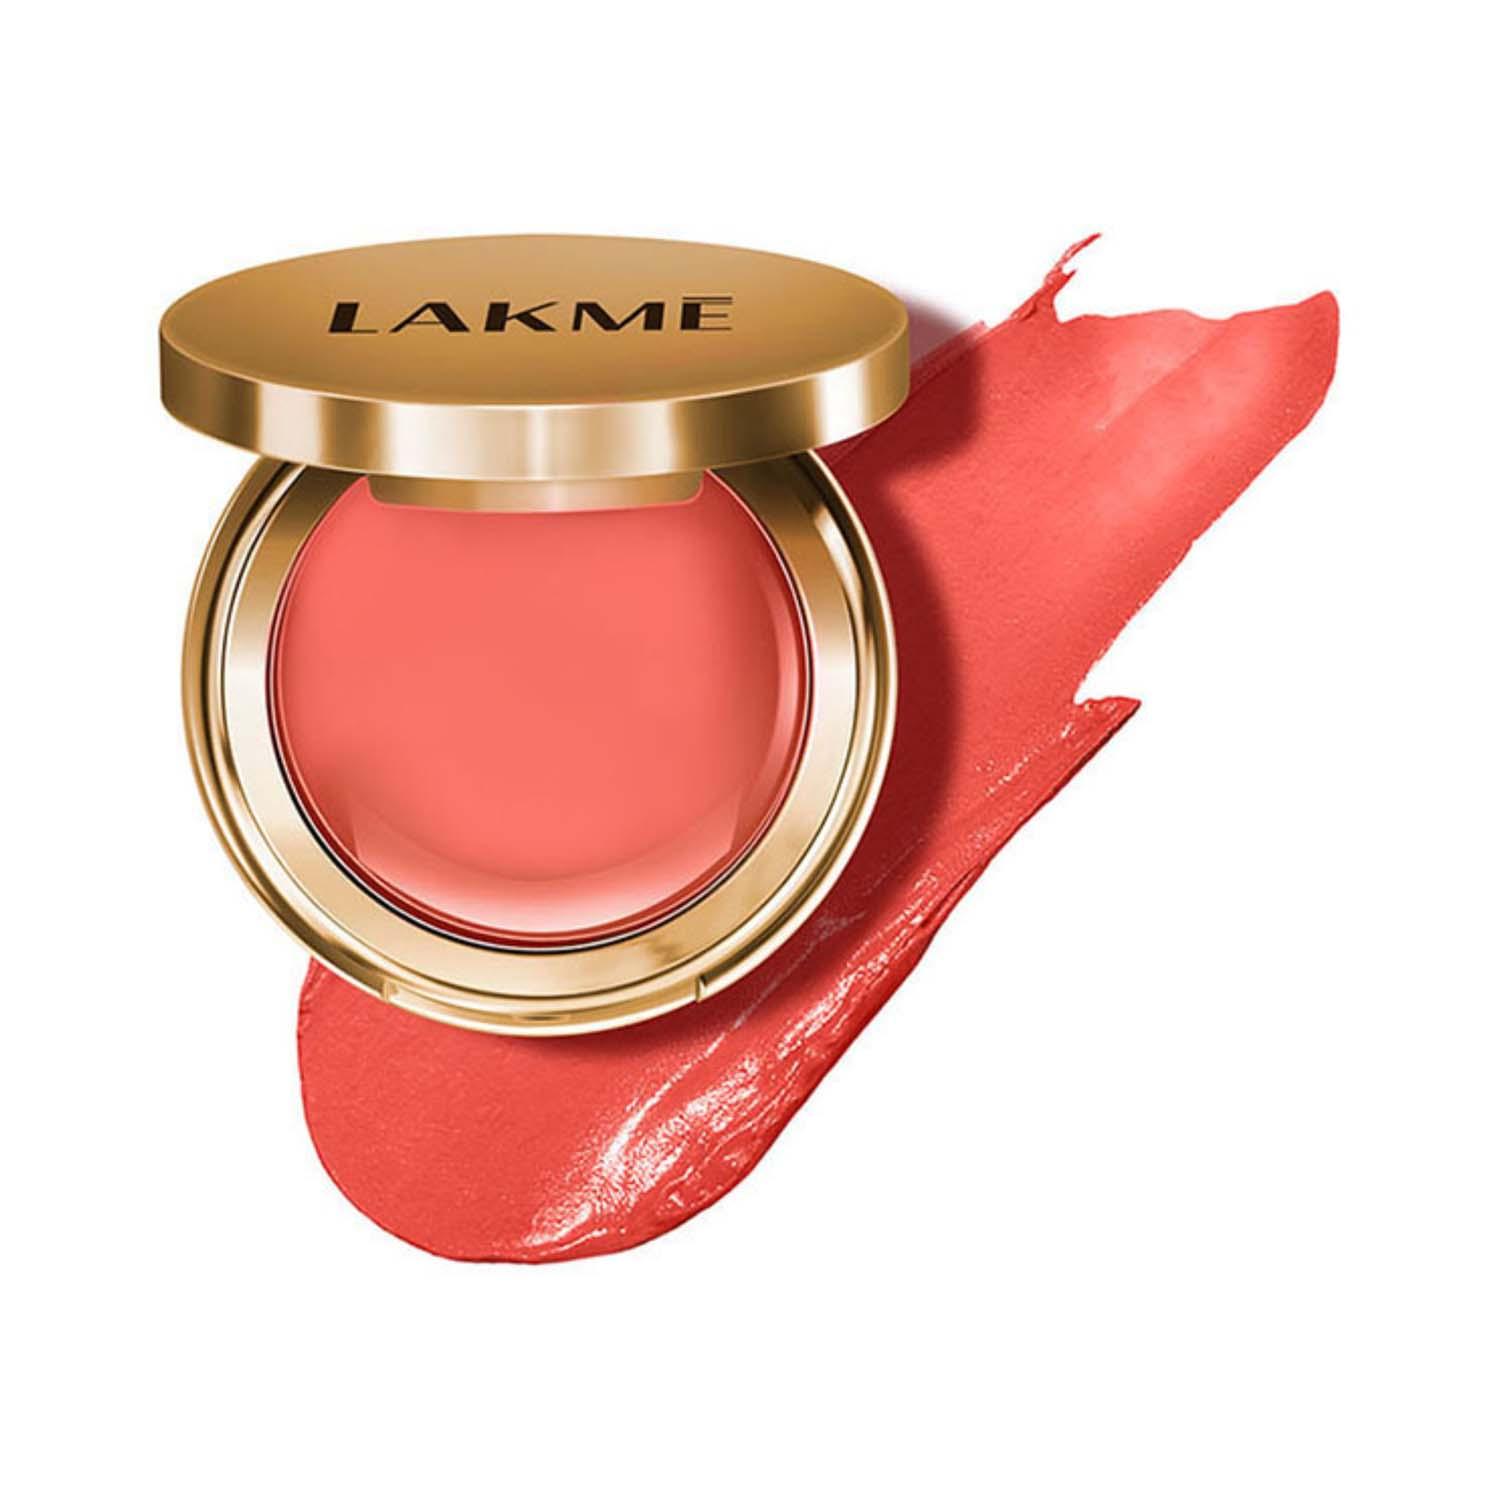 Lakme | Lakme 9 To 5 Powerplay Velvet Crème Blush - Soft Coral (9g)